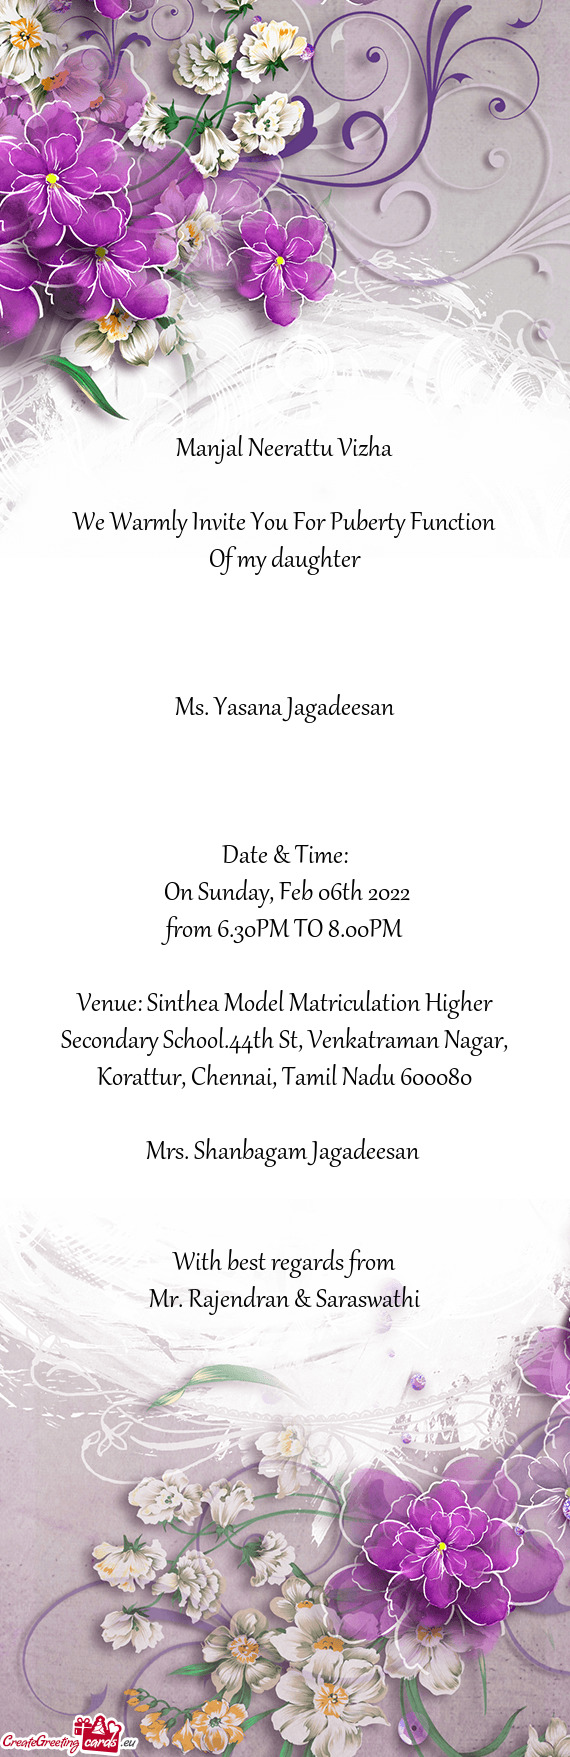 Ms. Yasana Jagadeesan